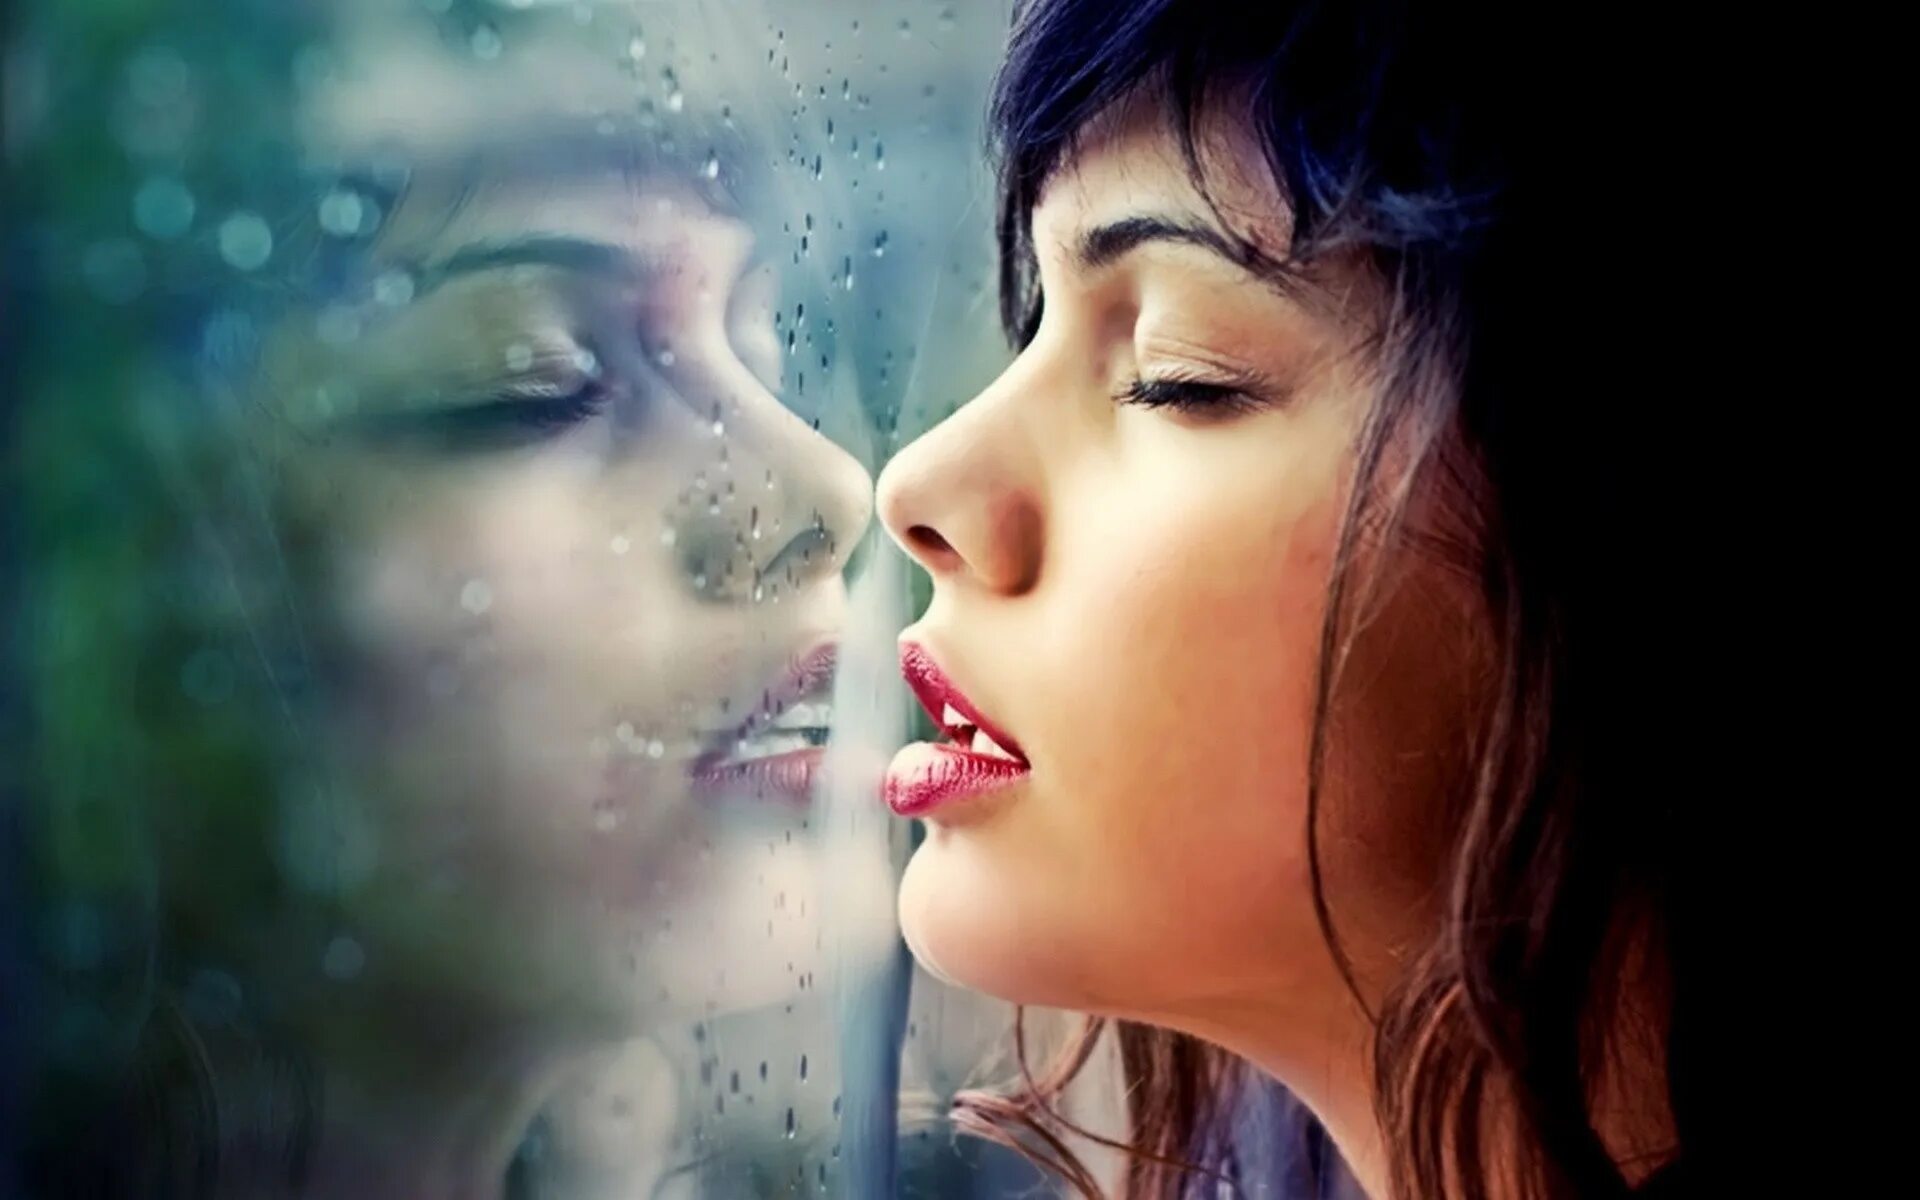 Девушка в слезах. Девушка плачет. Девушка целует свое отражение. Заплаканное лицо девушки. Reflection woman